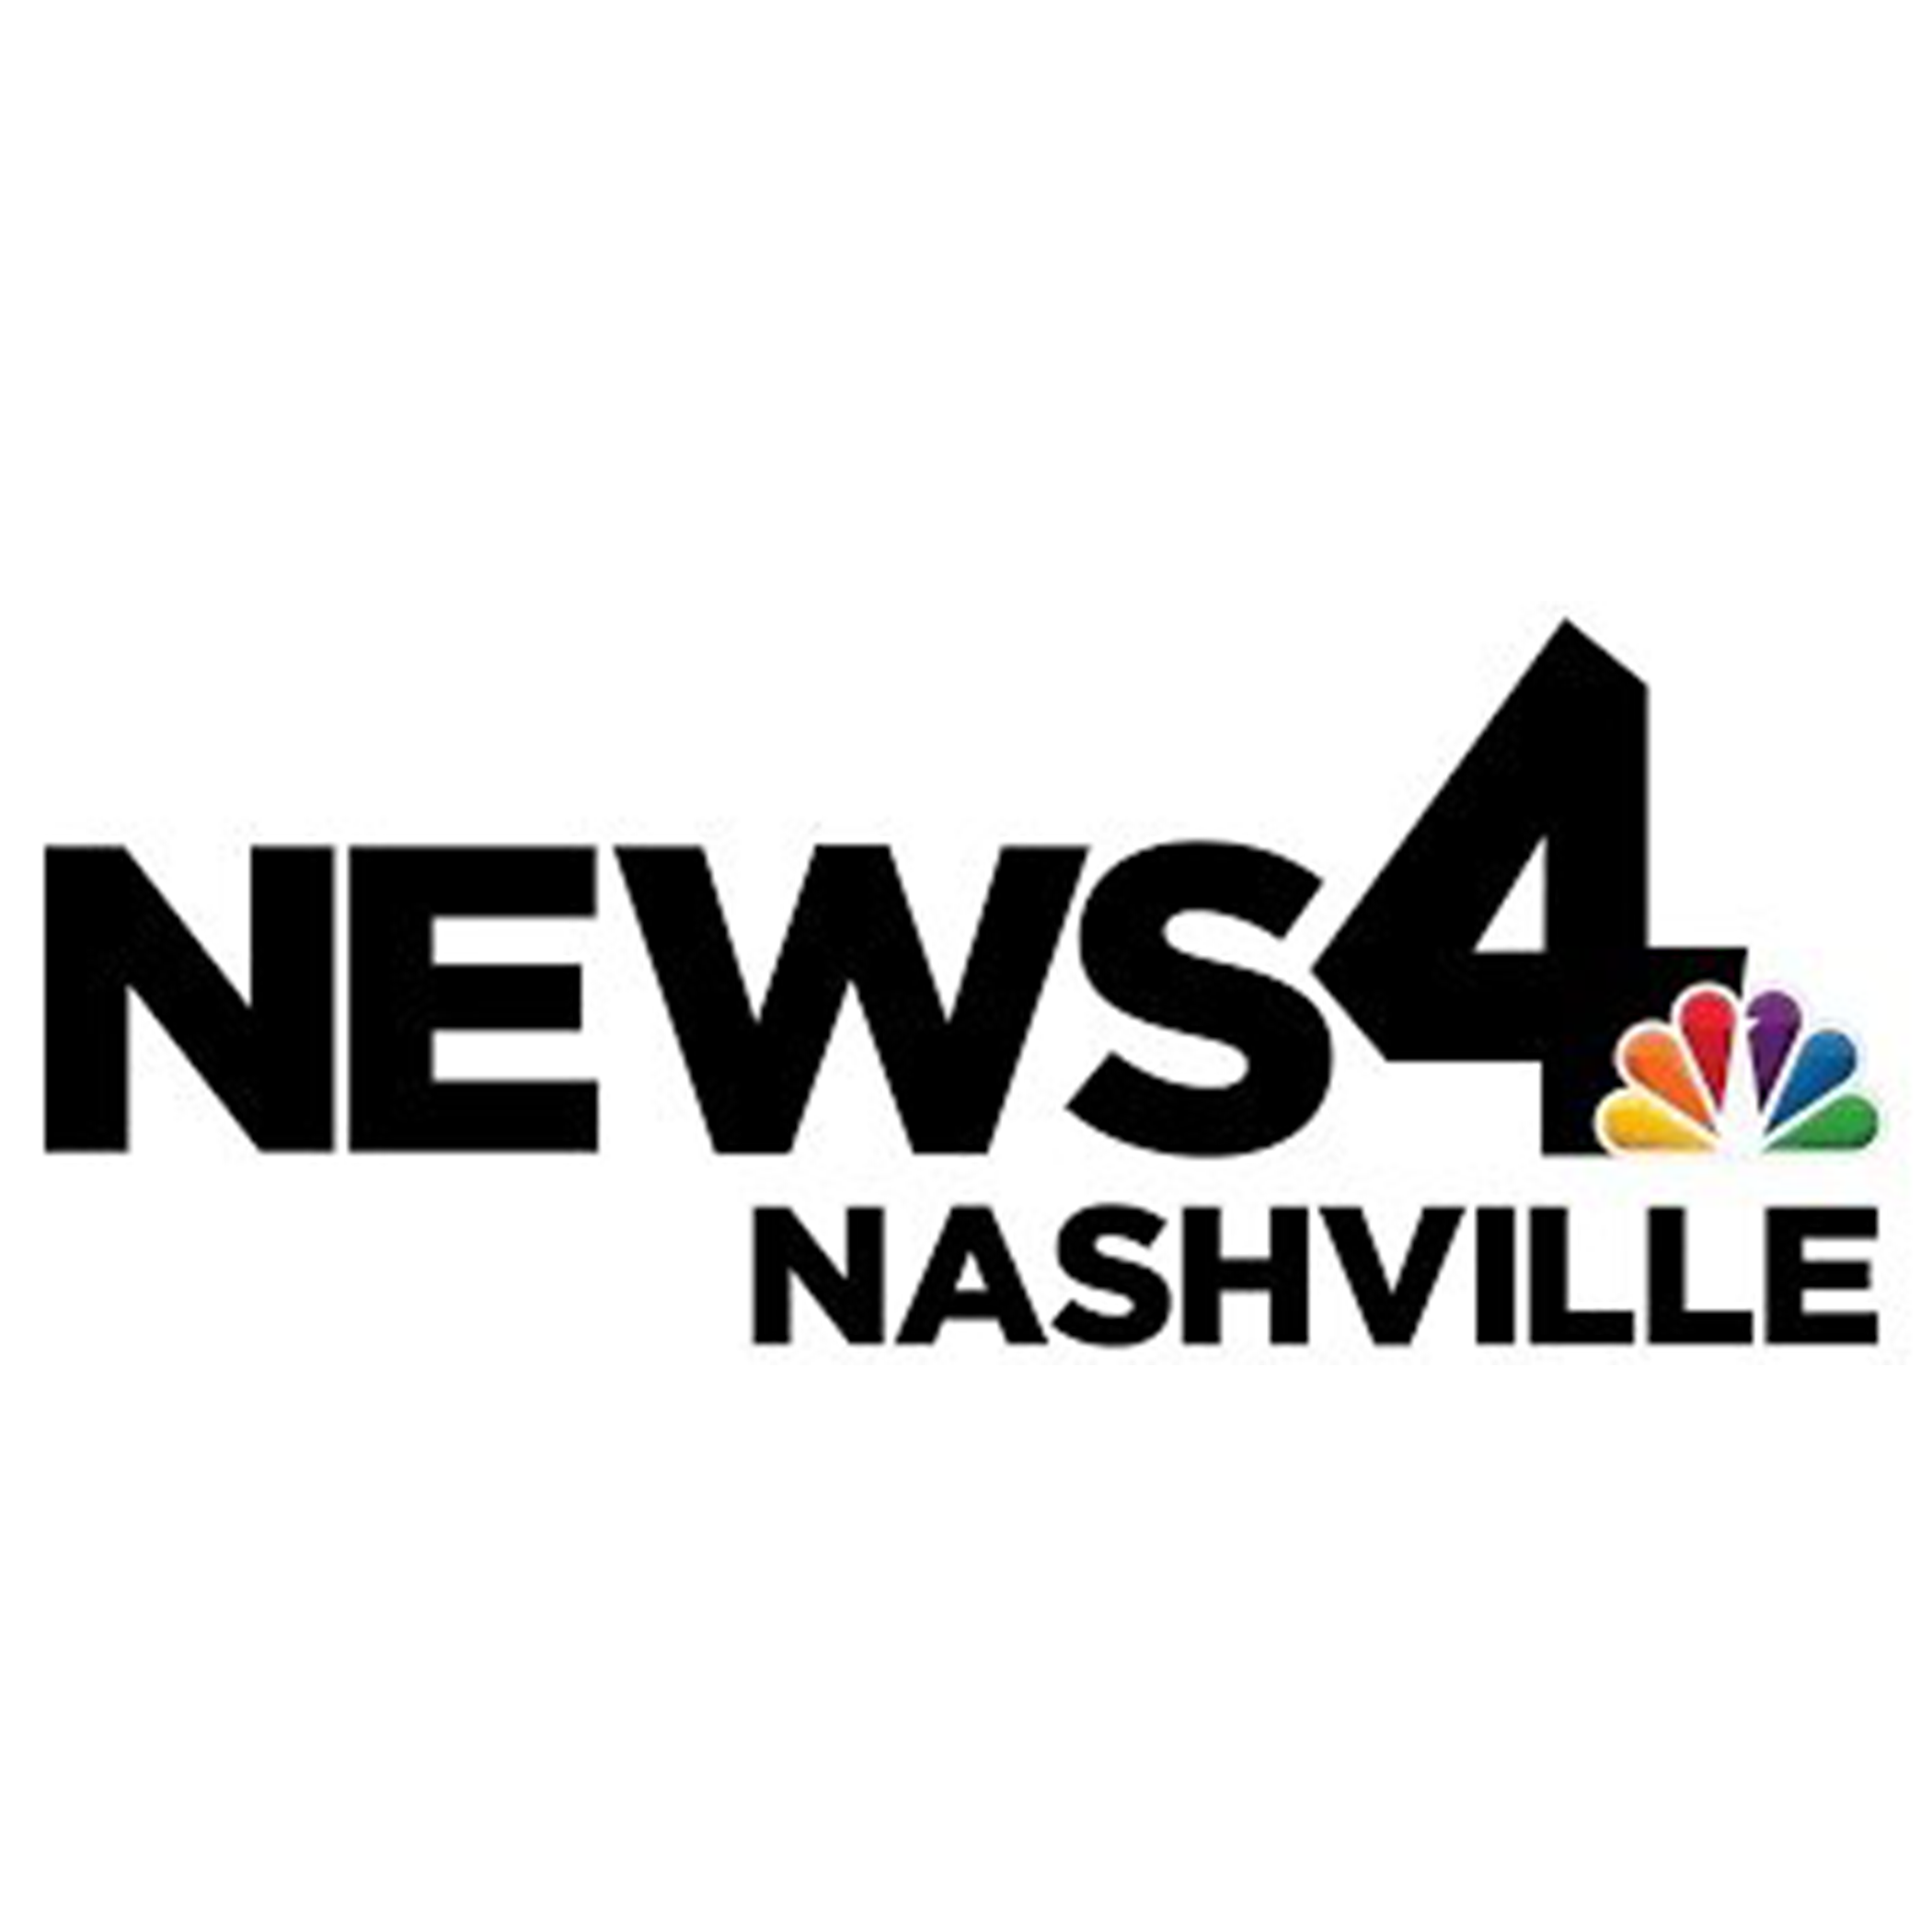 NBC News 4 Nashville